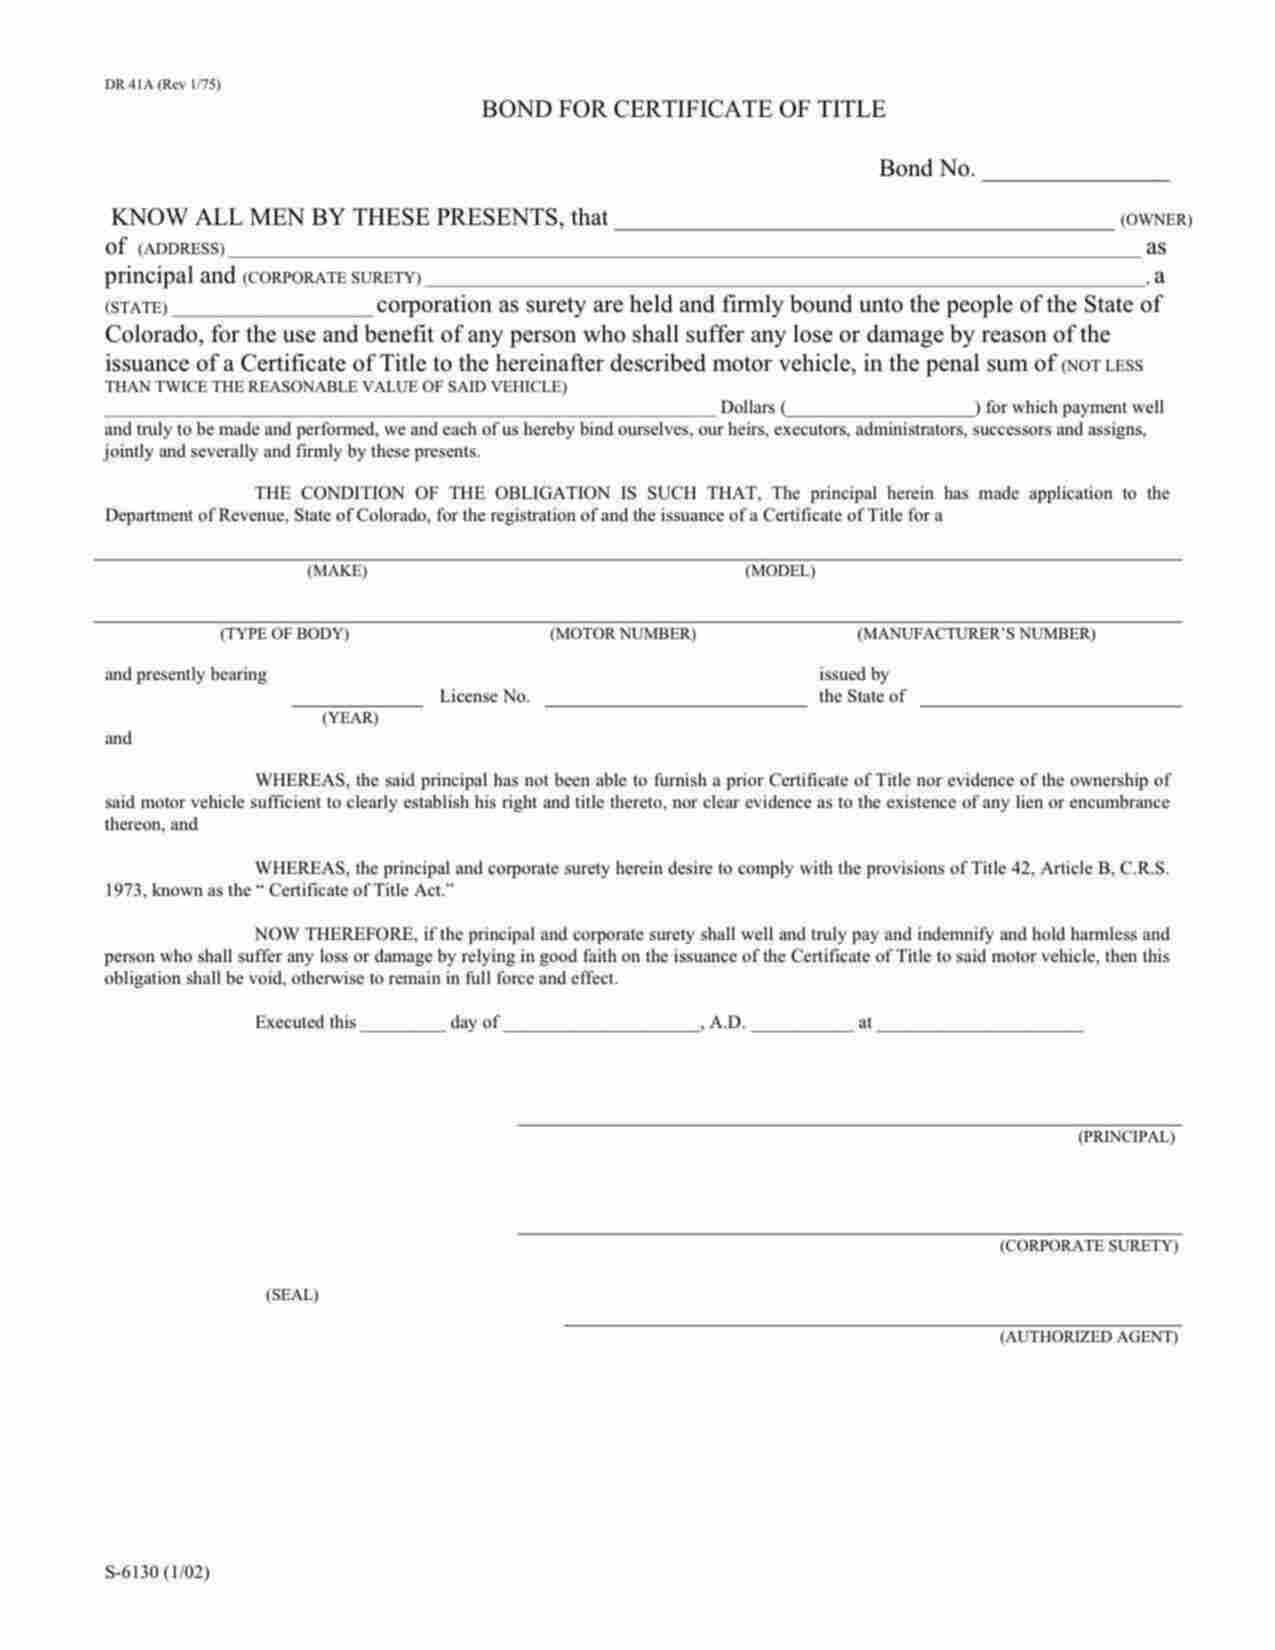 Colorado Motor Vehicle Certificate of Title Bond Form